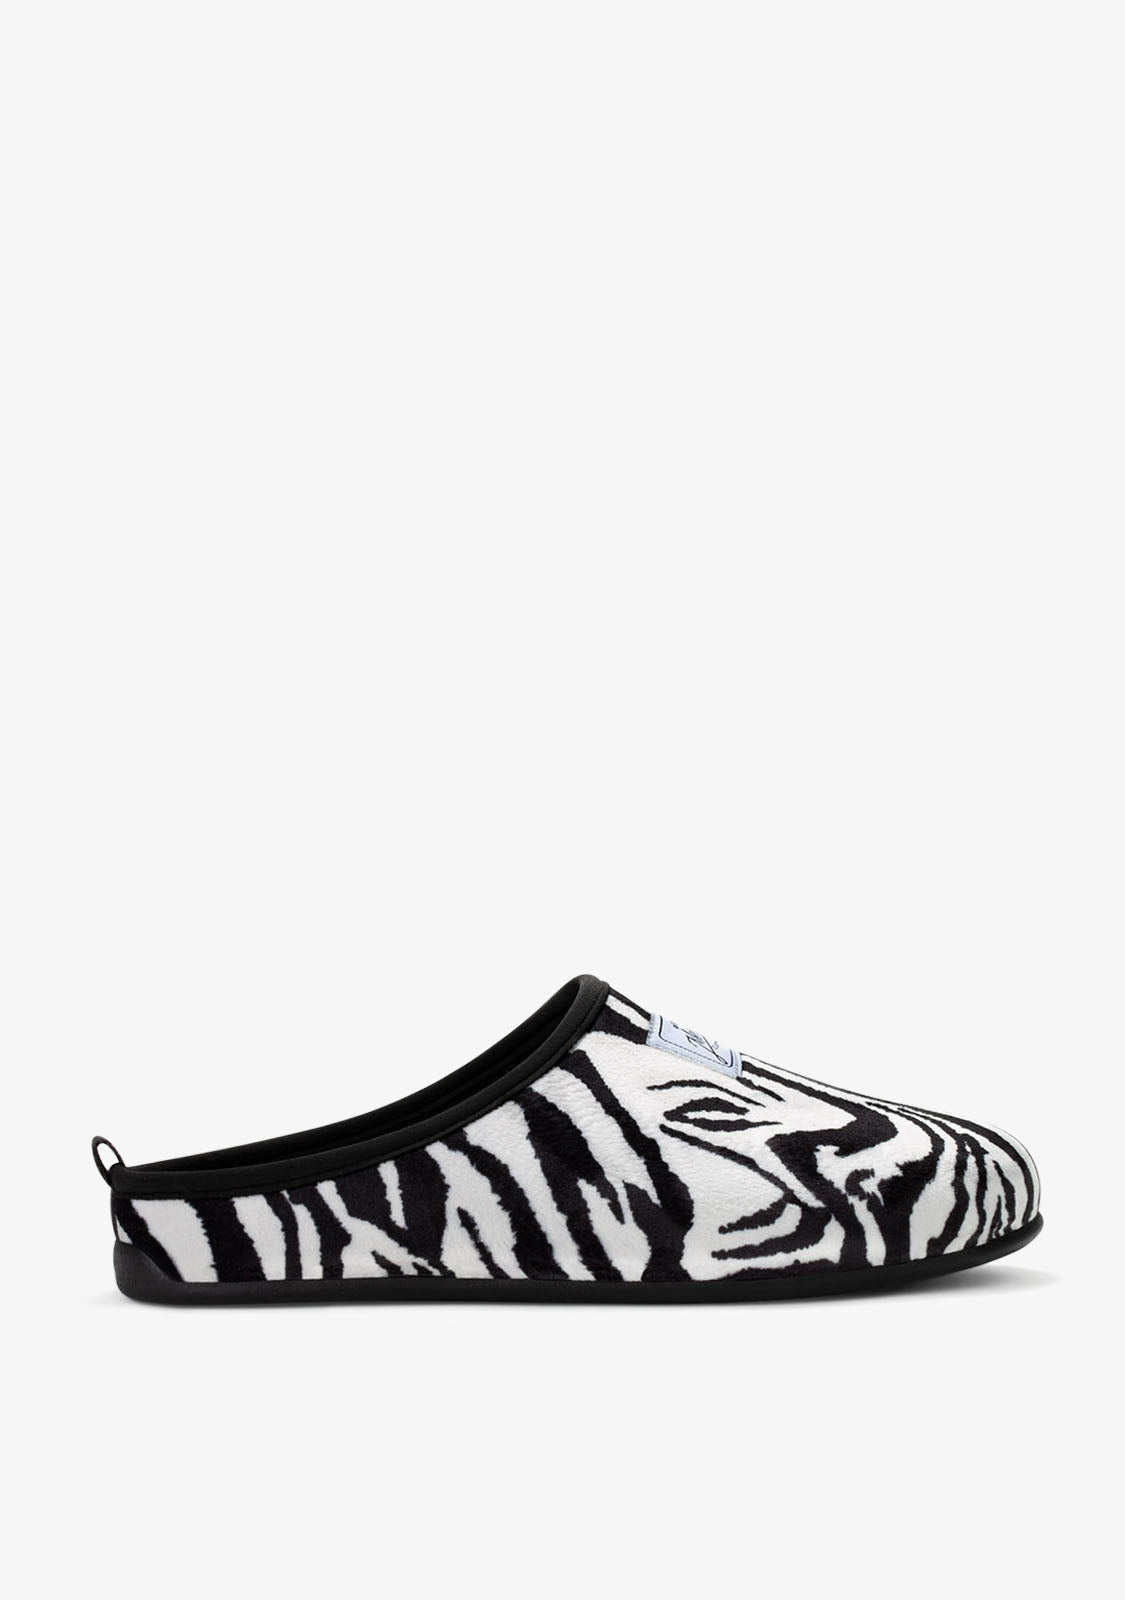 Mercredy Slipper Zebra